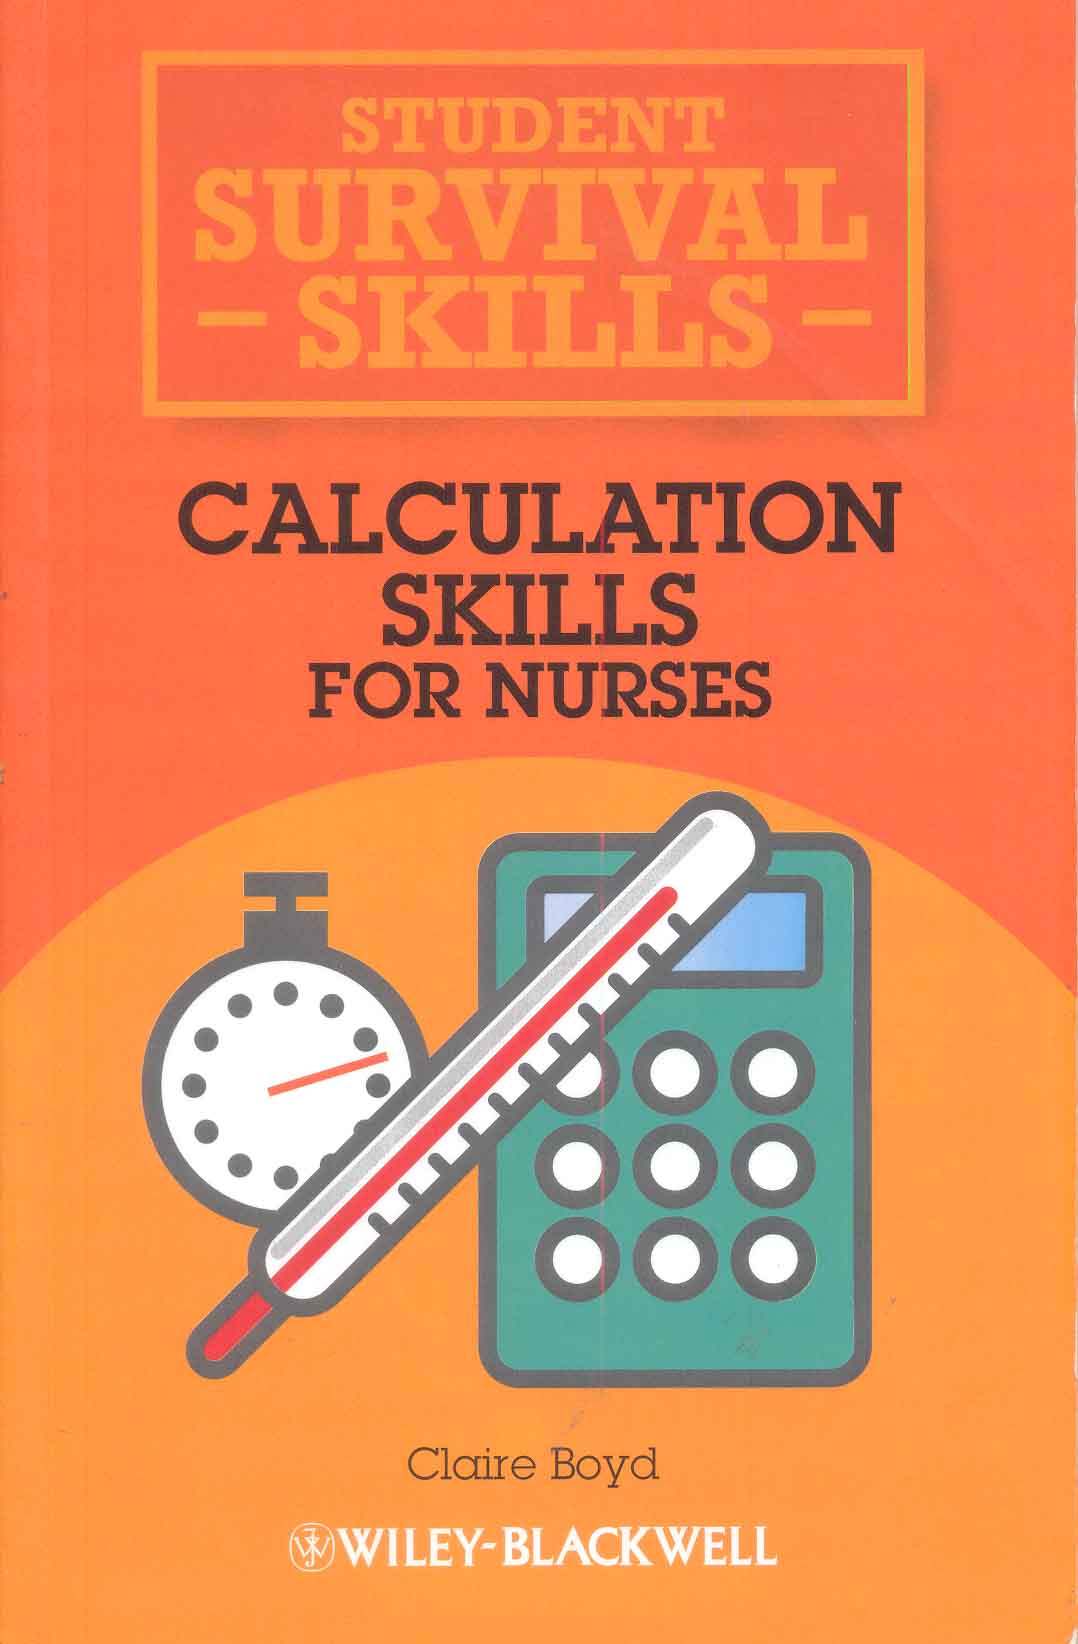 Calculation skills for nurses